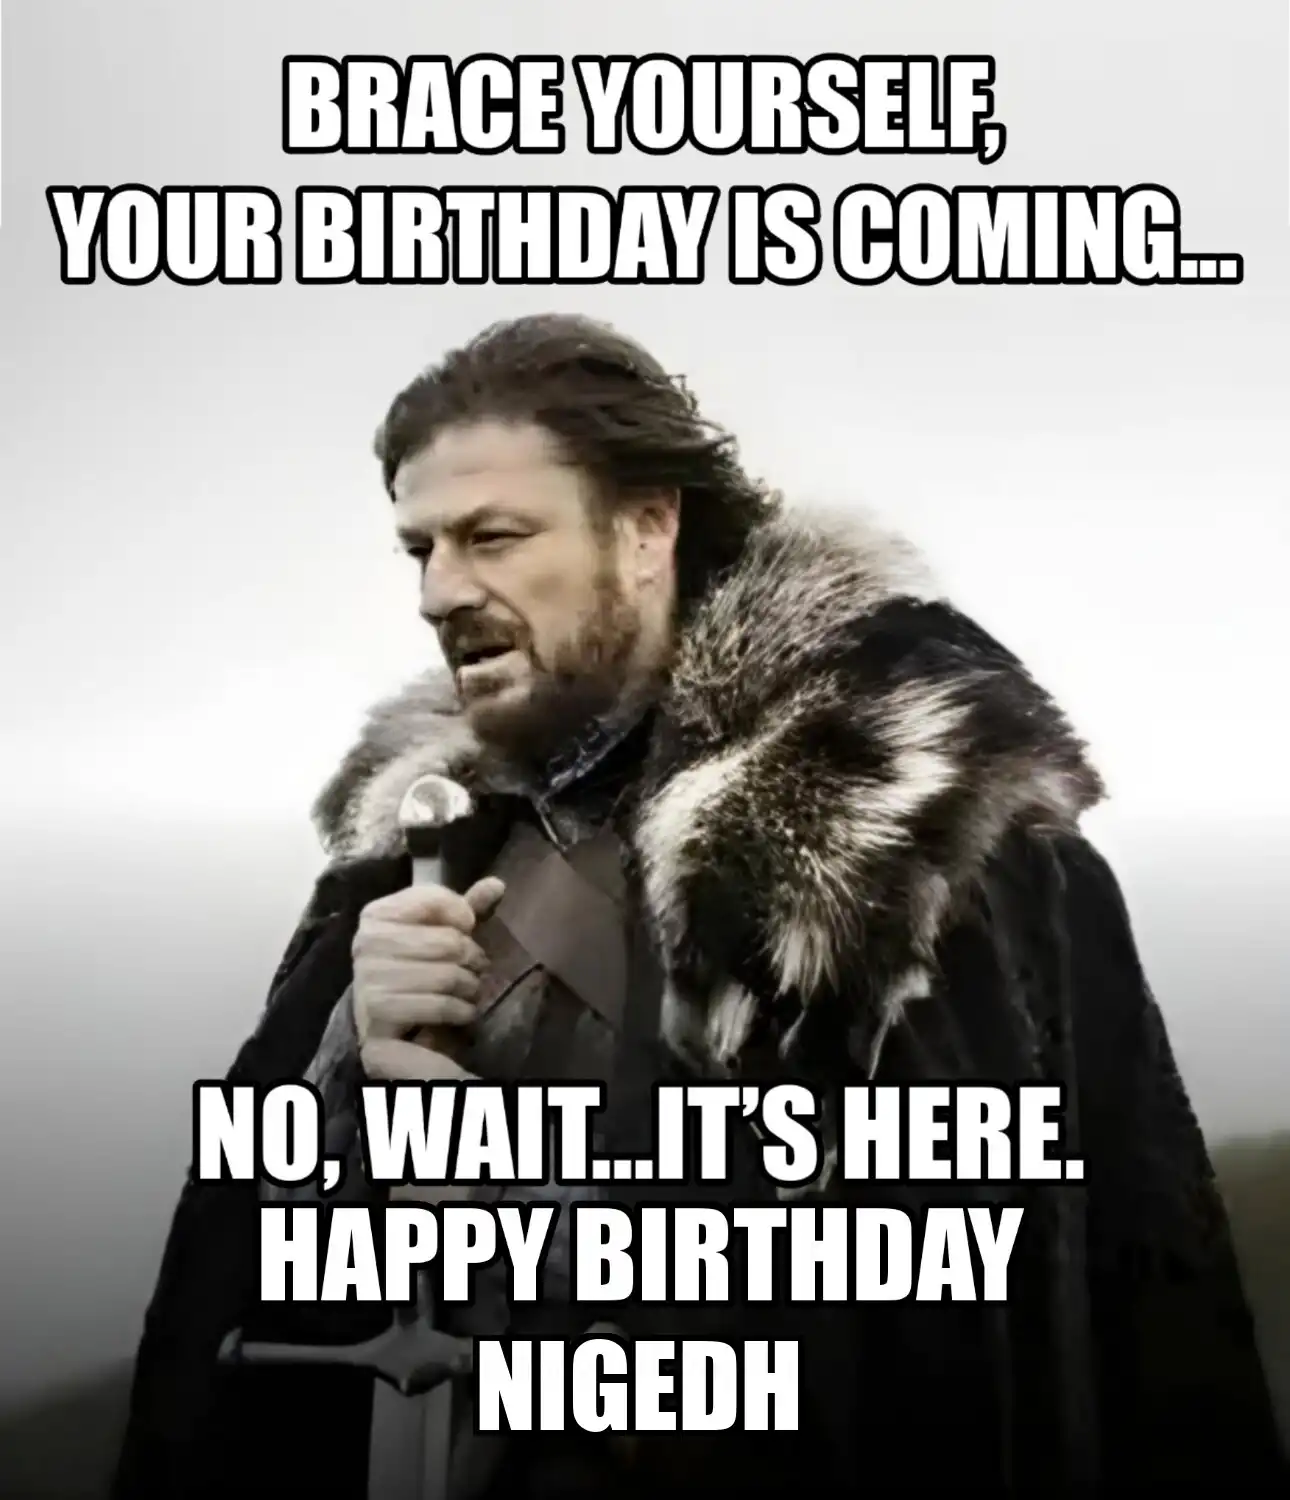 Happy Birthday Nigedh Brace Yourself Your Birthday Is Coming Meme